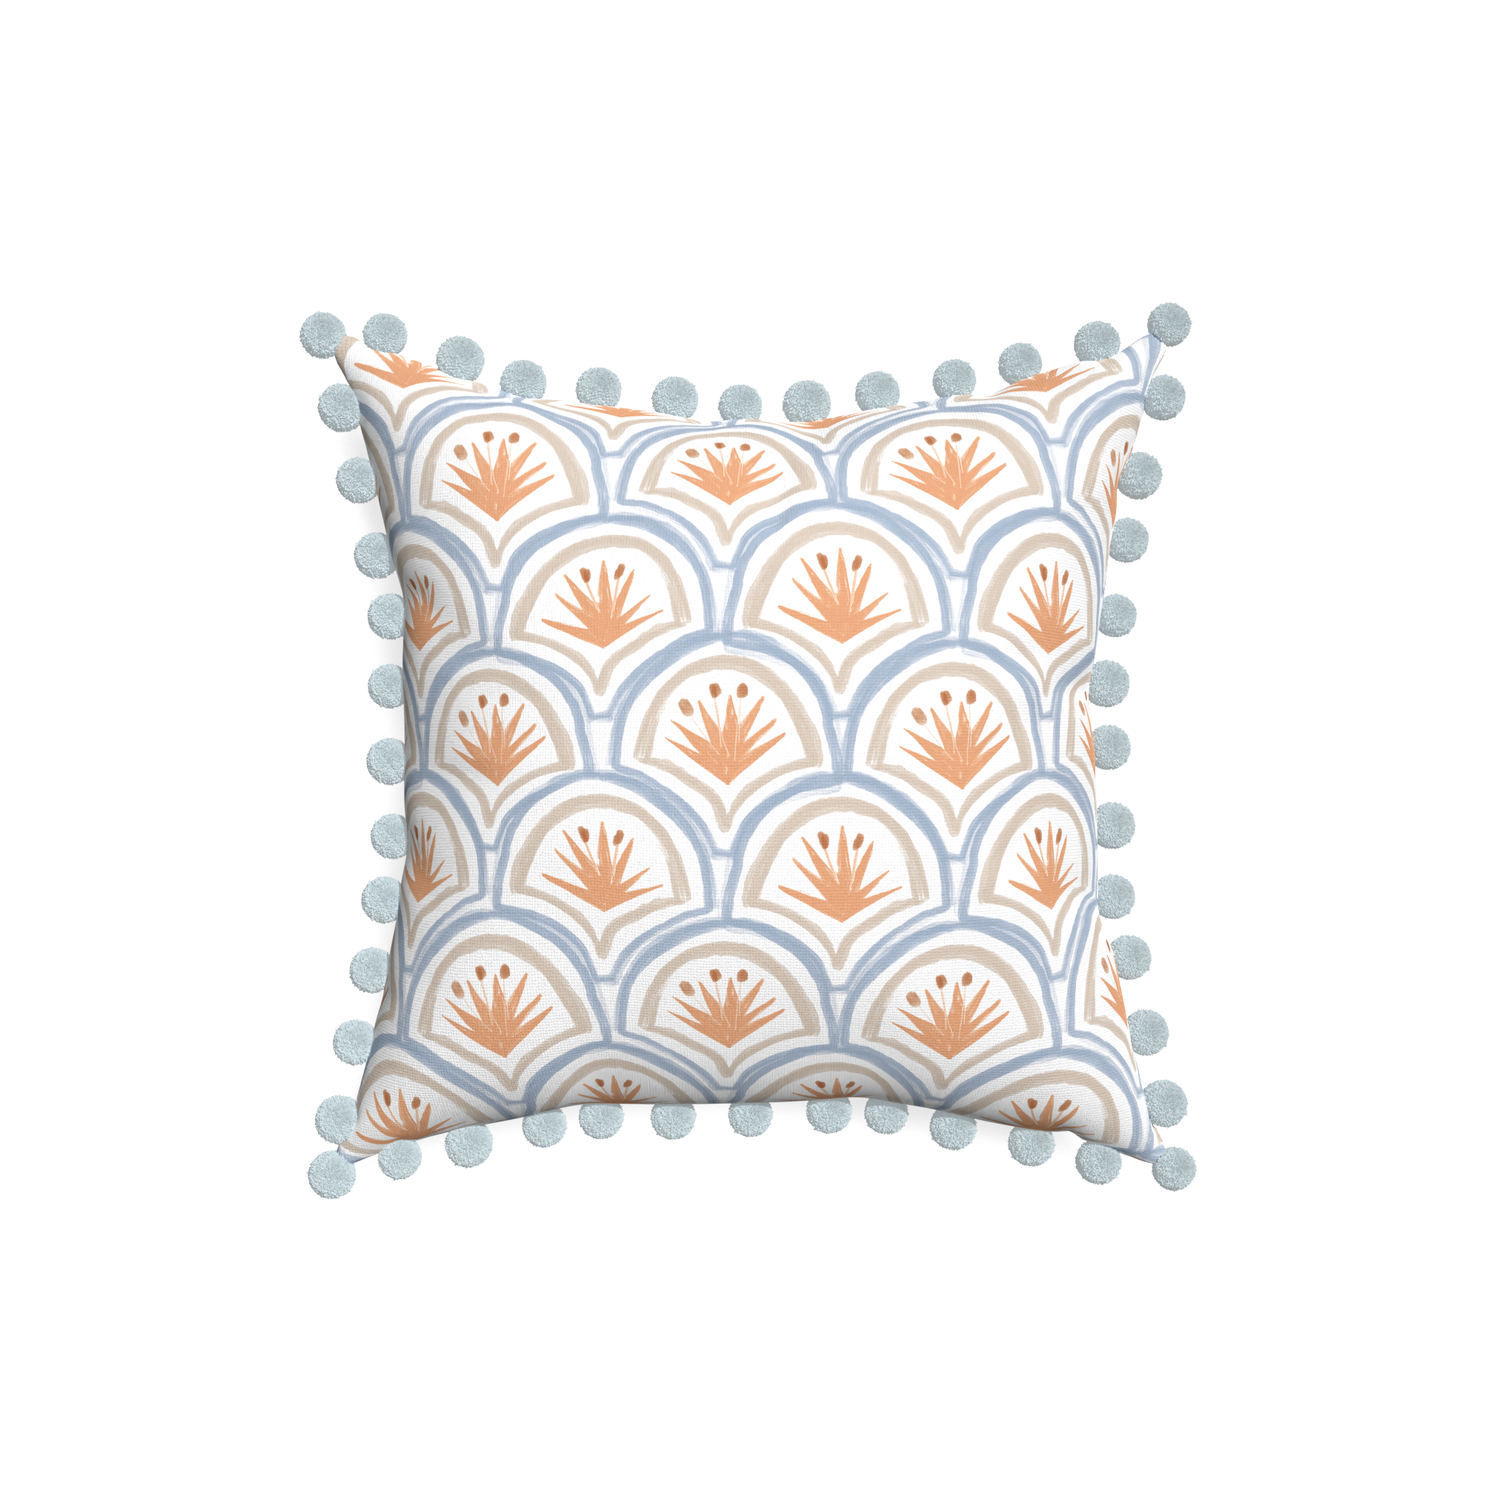 18-square thatcher apricot custom art deco palm patternpillow with powder pom pom on white background